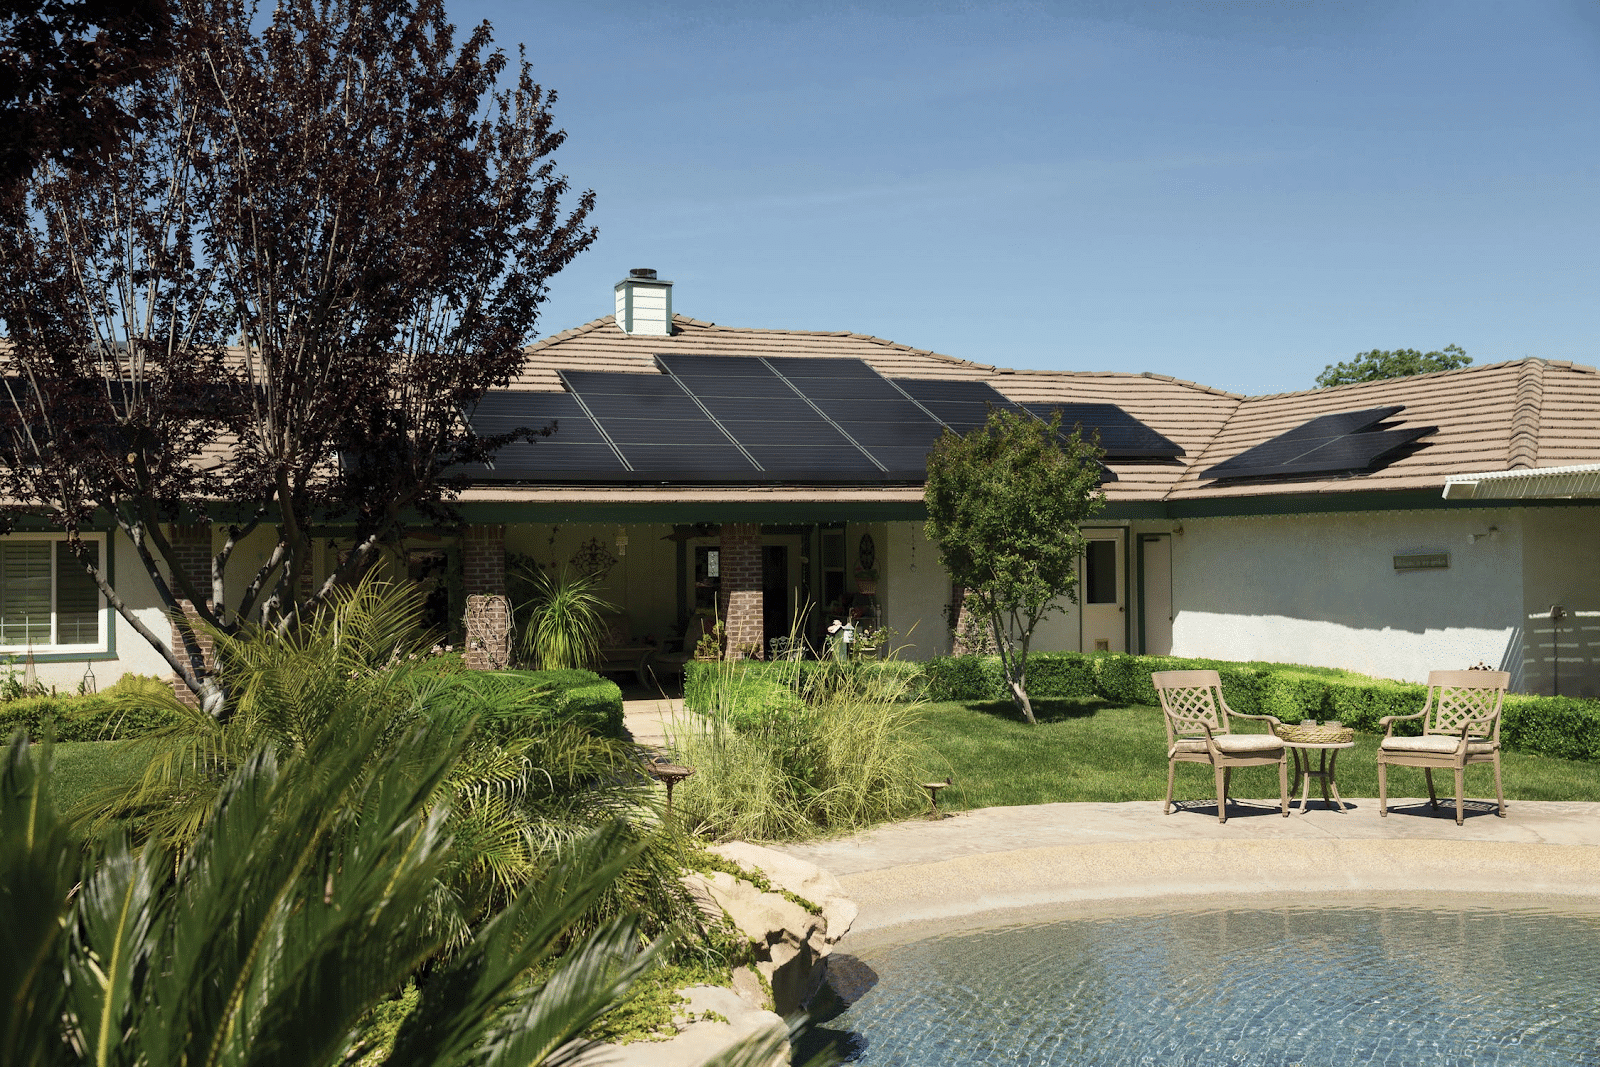 solar power roof